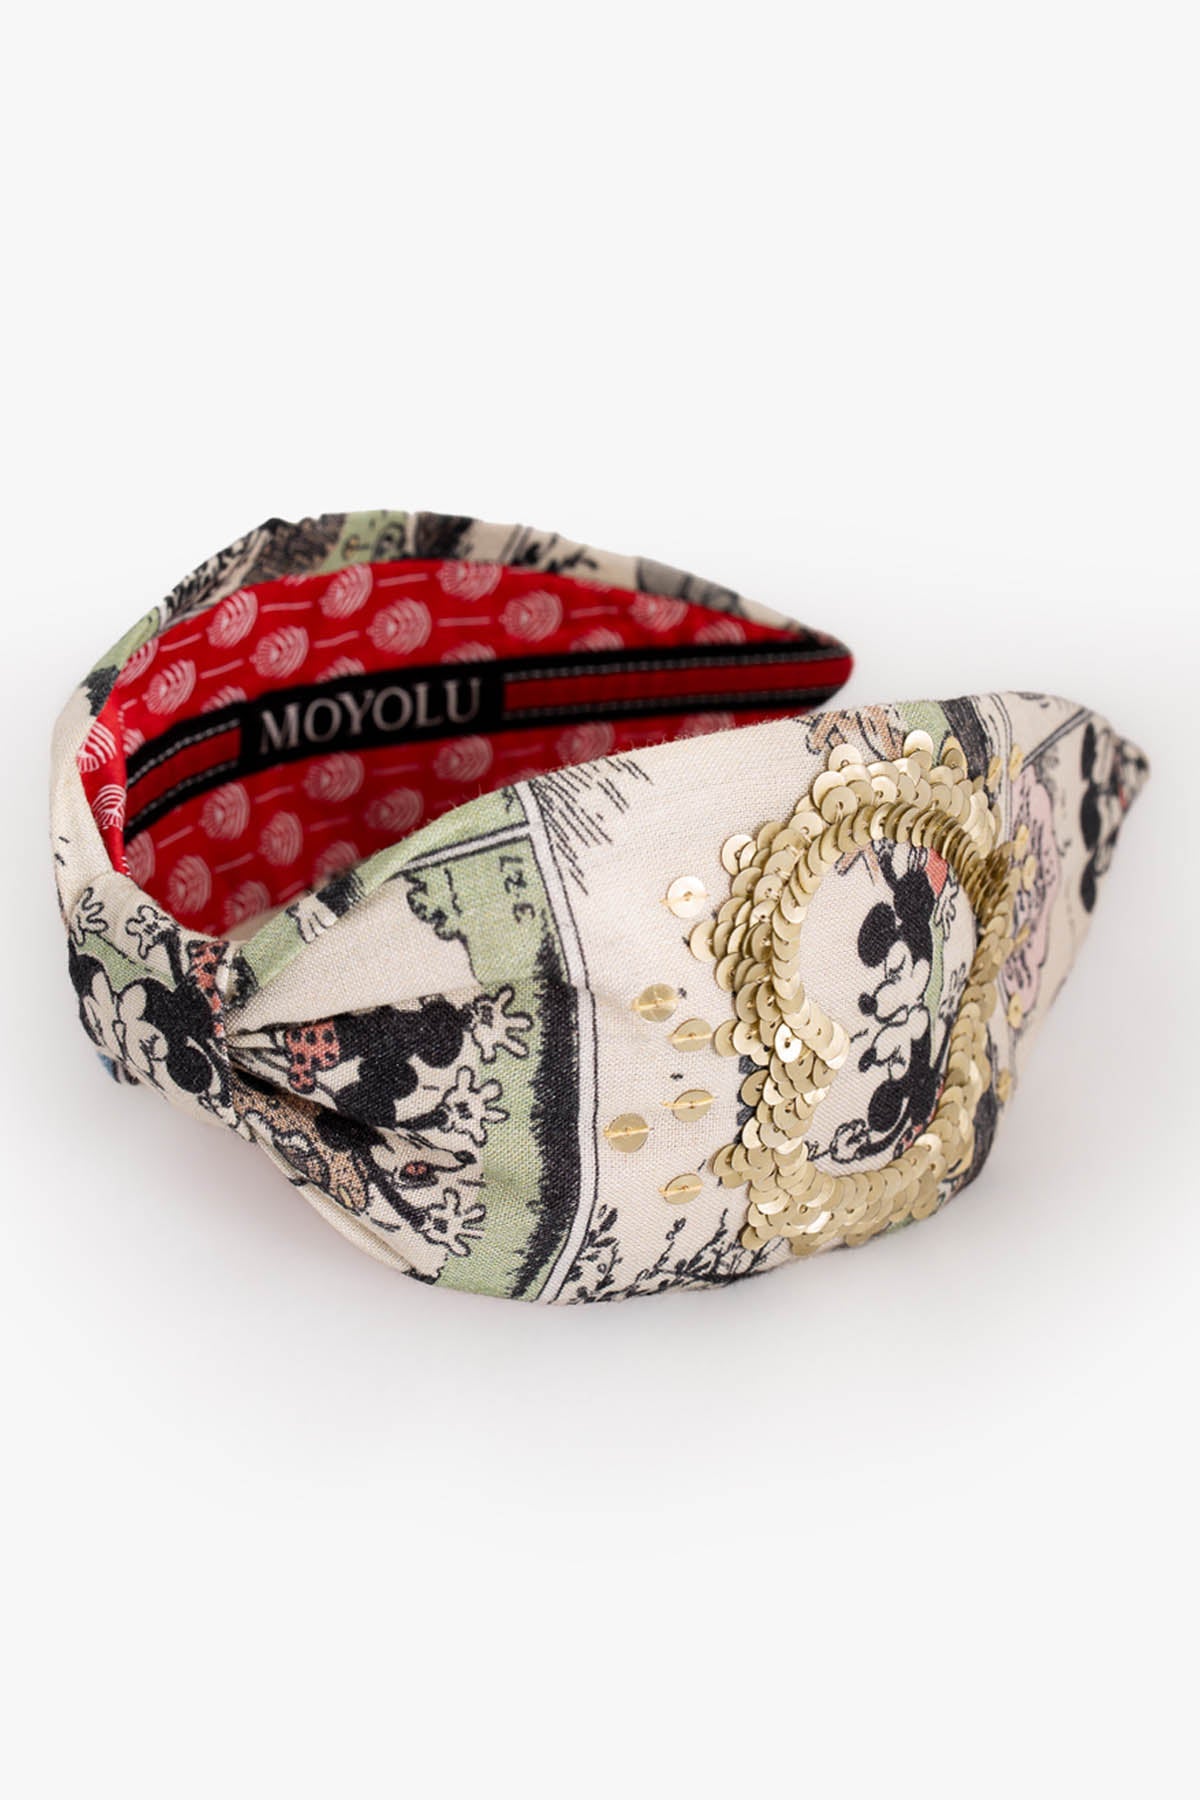 Moyolu Cotton Embellished Headband Accessories online at ScrollnShops